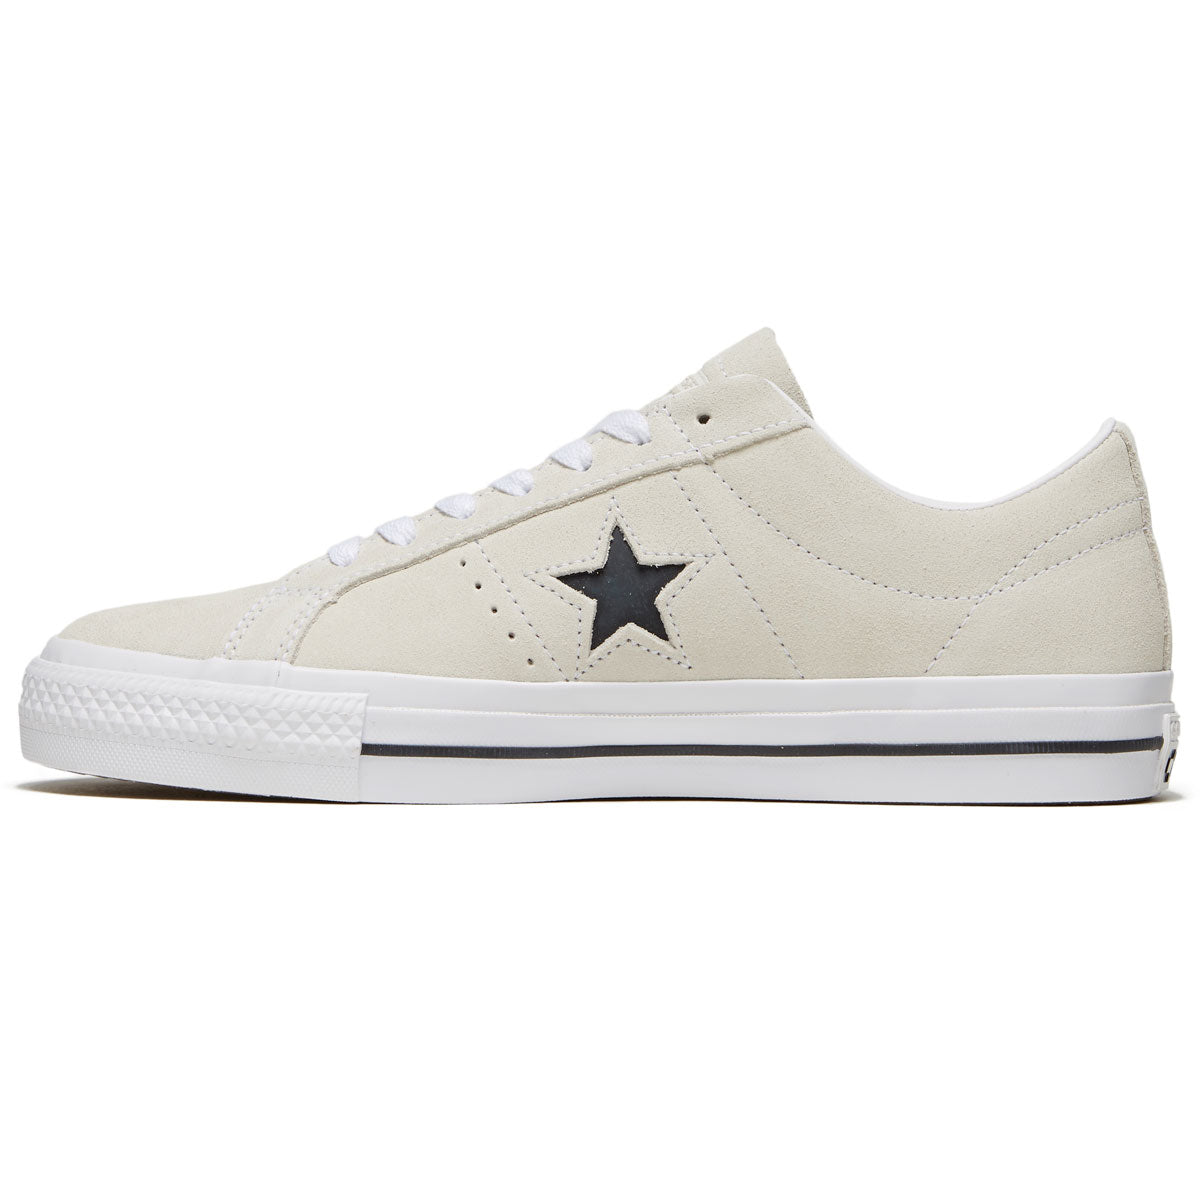 Converse One Star Pro Suede Shoes - Egret/White/Black, – Daddies Board Shop